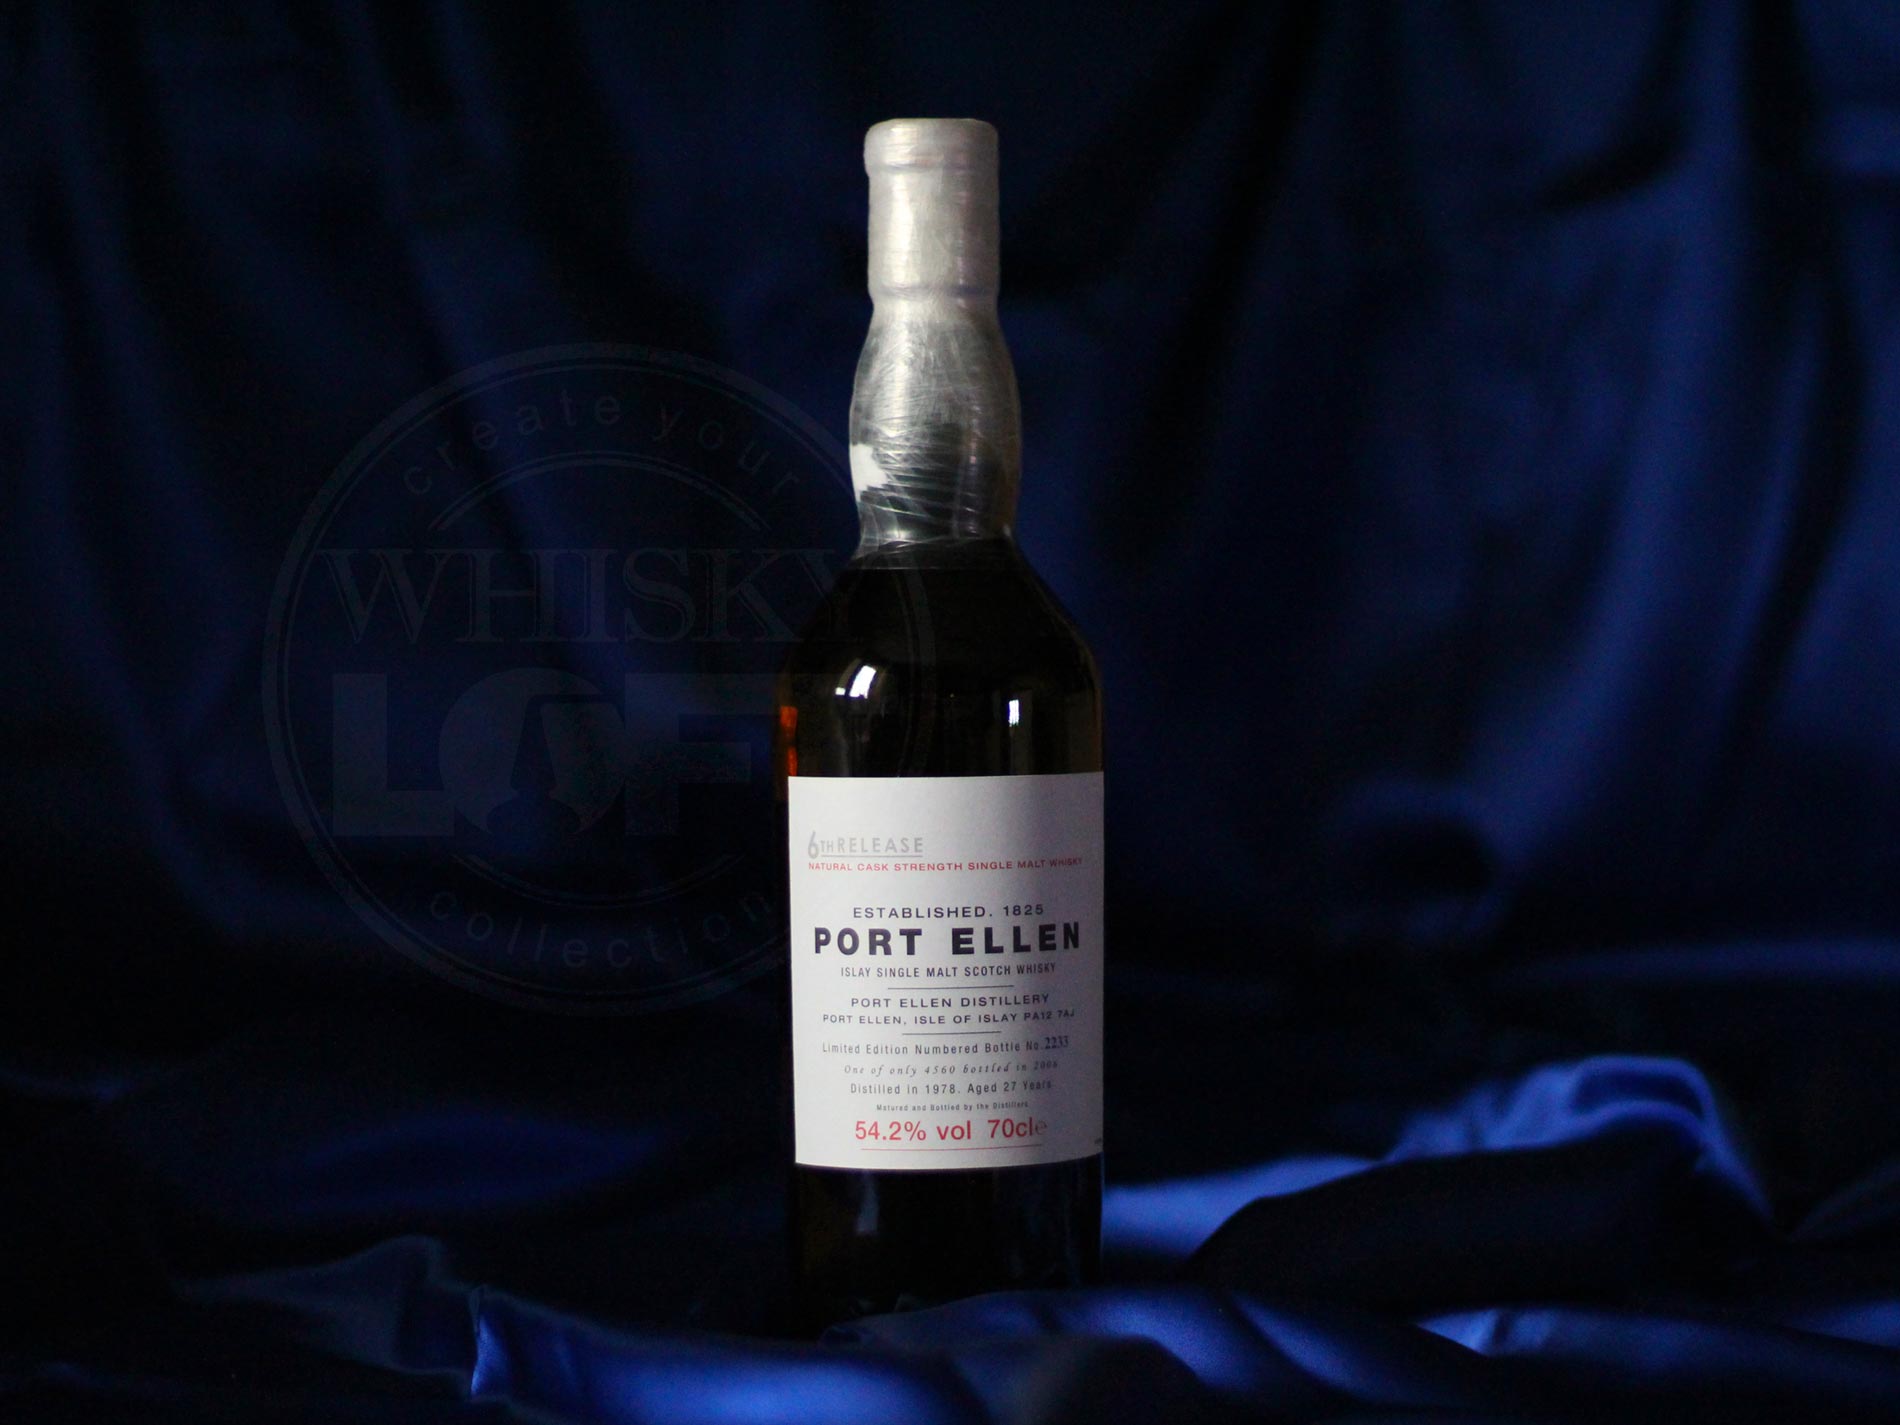 Single Malt Scotch Whisky, 1978 distilled, 27 years old.